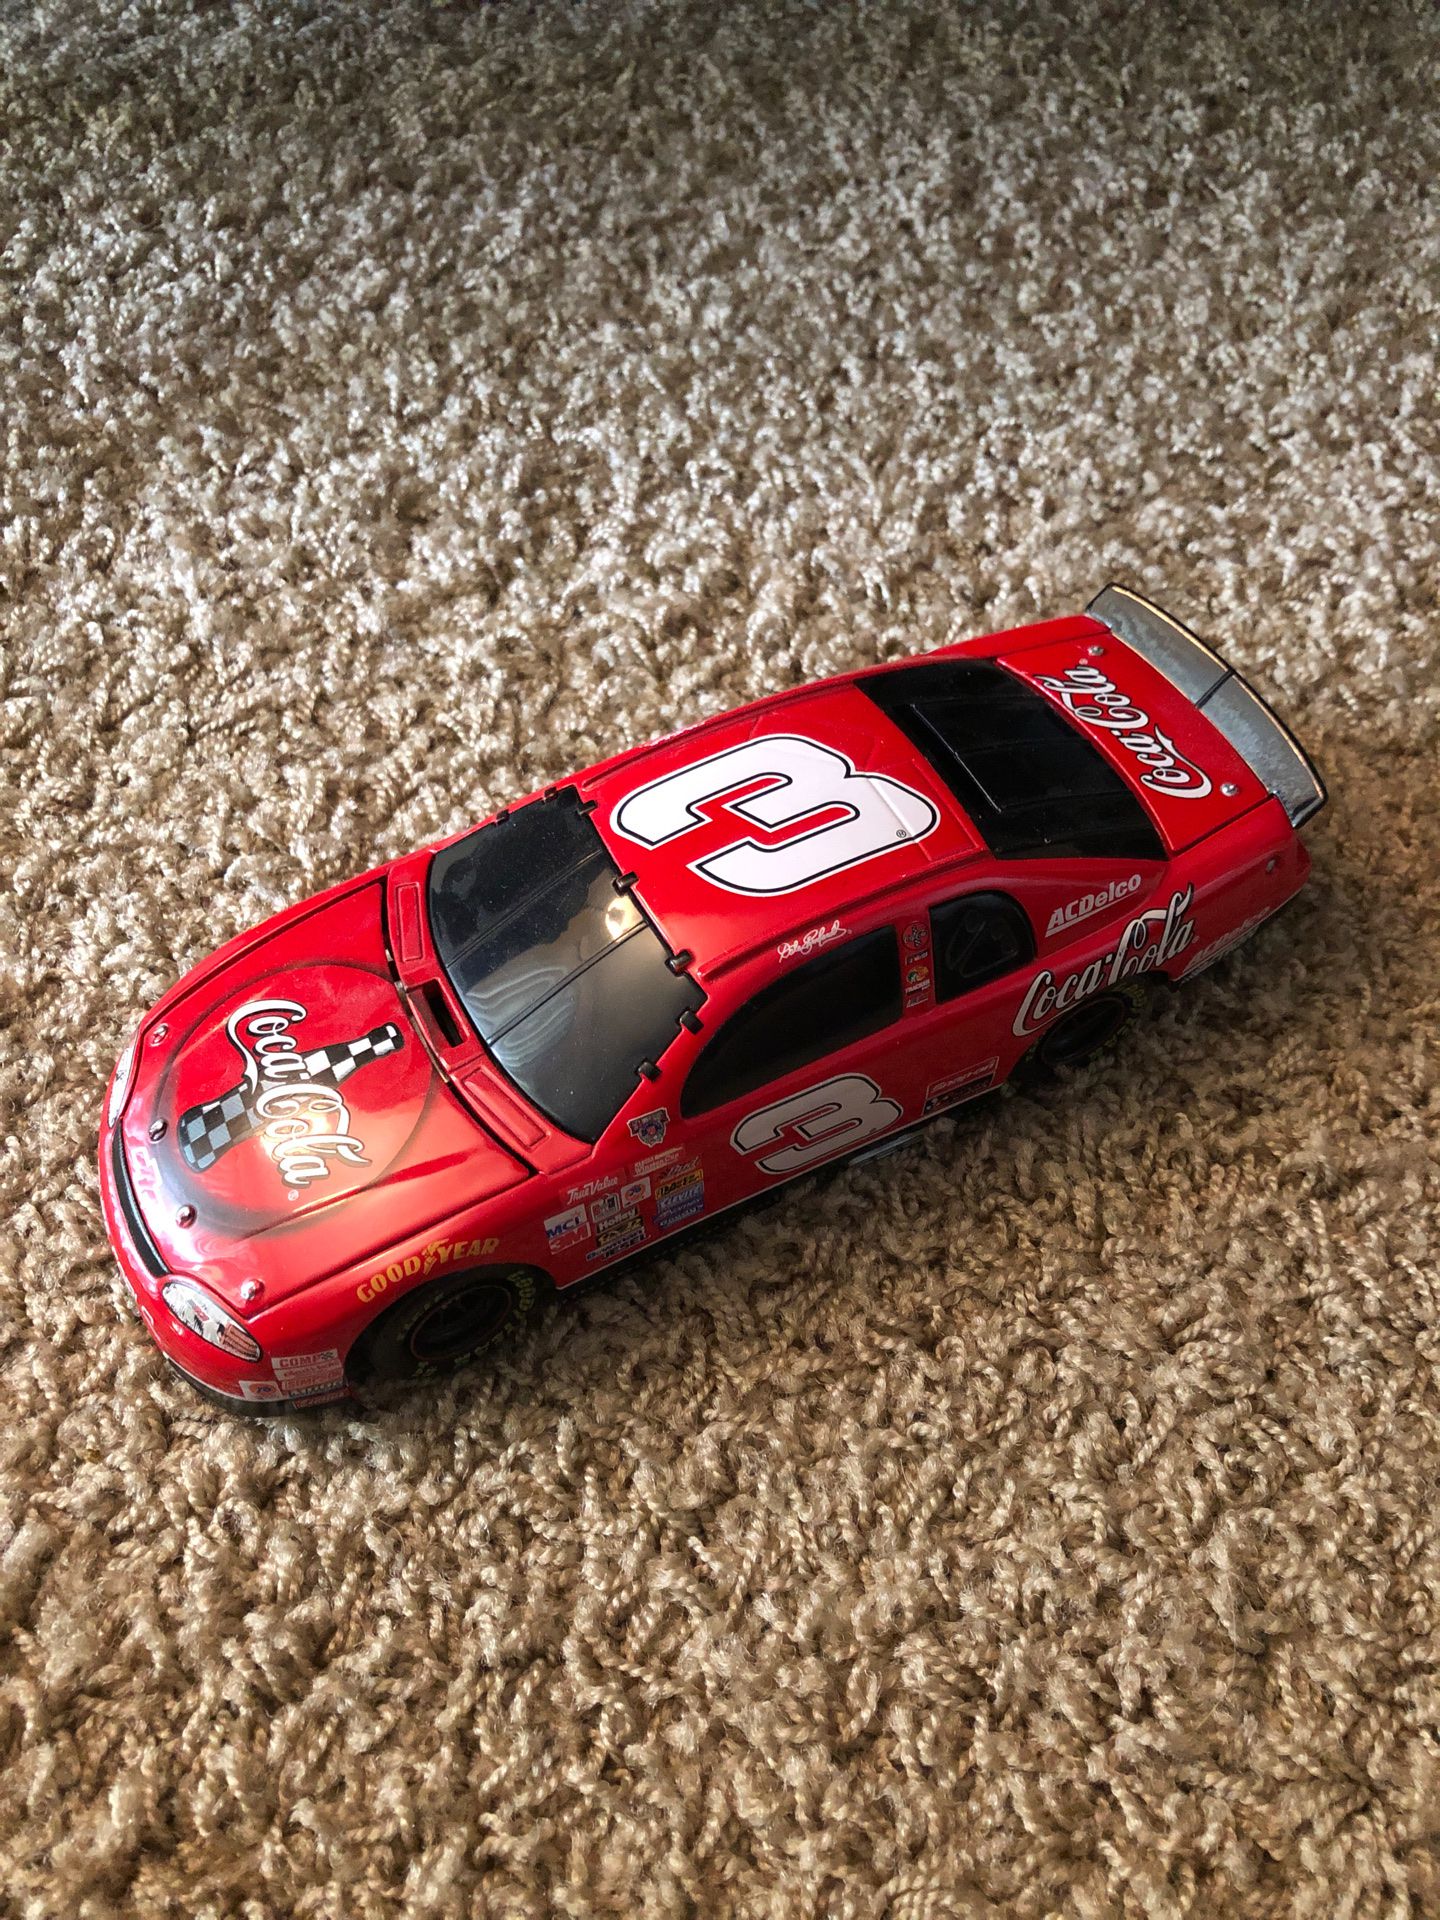 Dale Earnhardt #3 Coca-Cola NASCAR die cast car